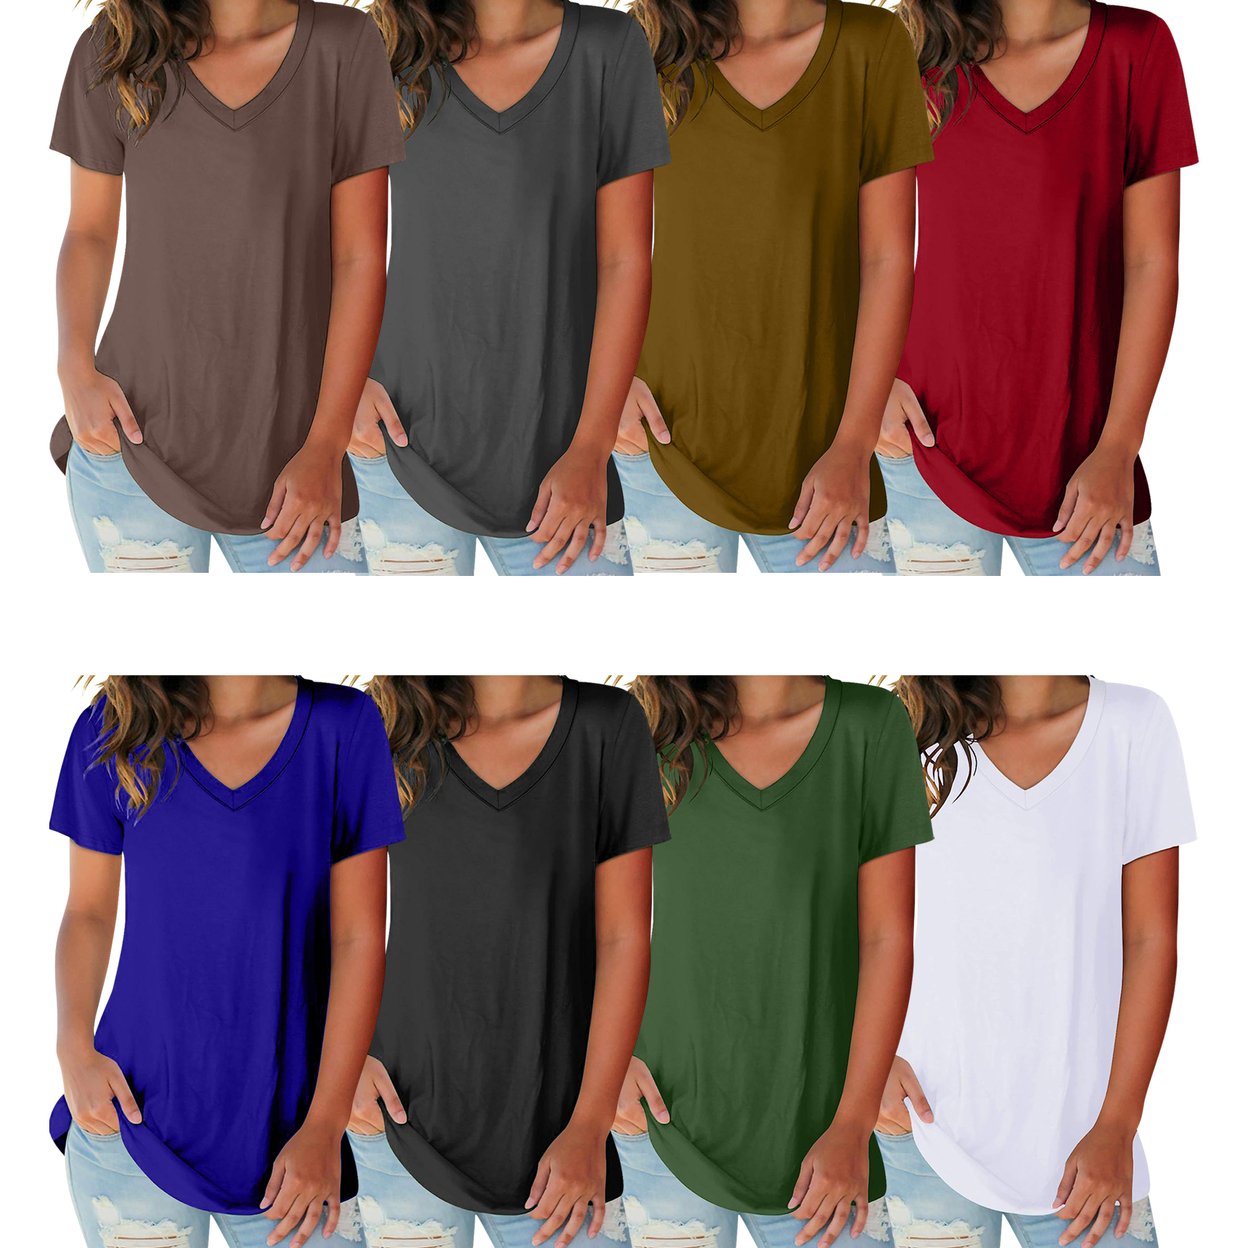 5-Pack: Women's Ultra Soft Smooth Cotton Blend Basic V-Neck Short Sleeve Shirts - X-large